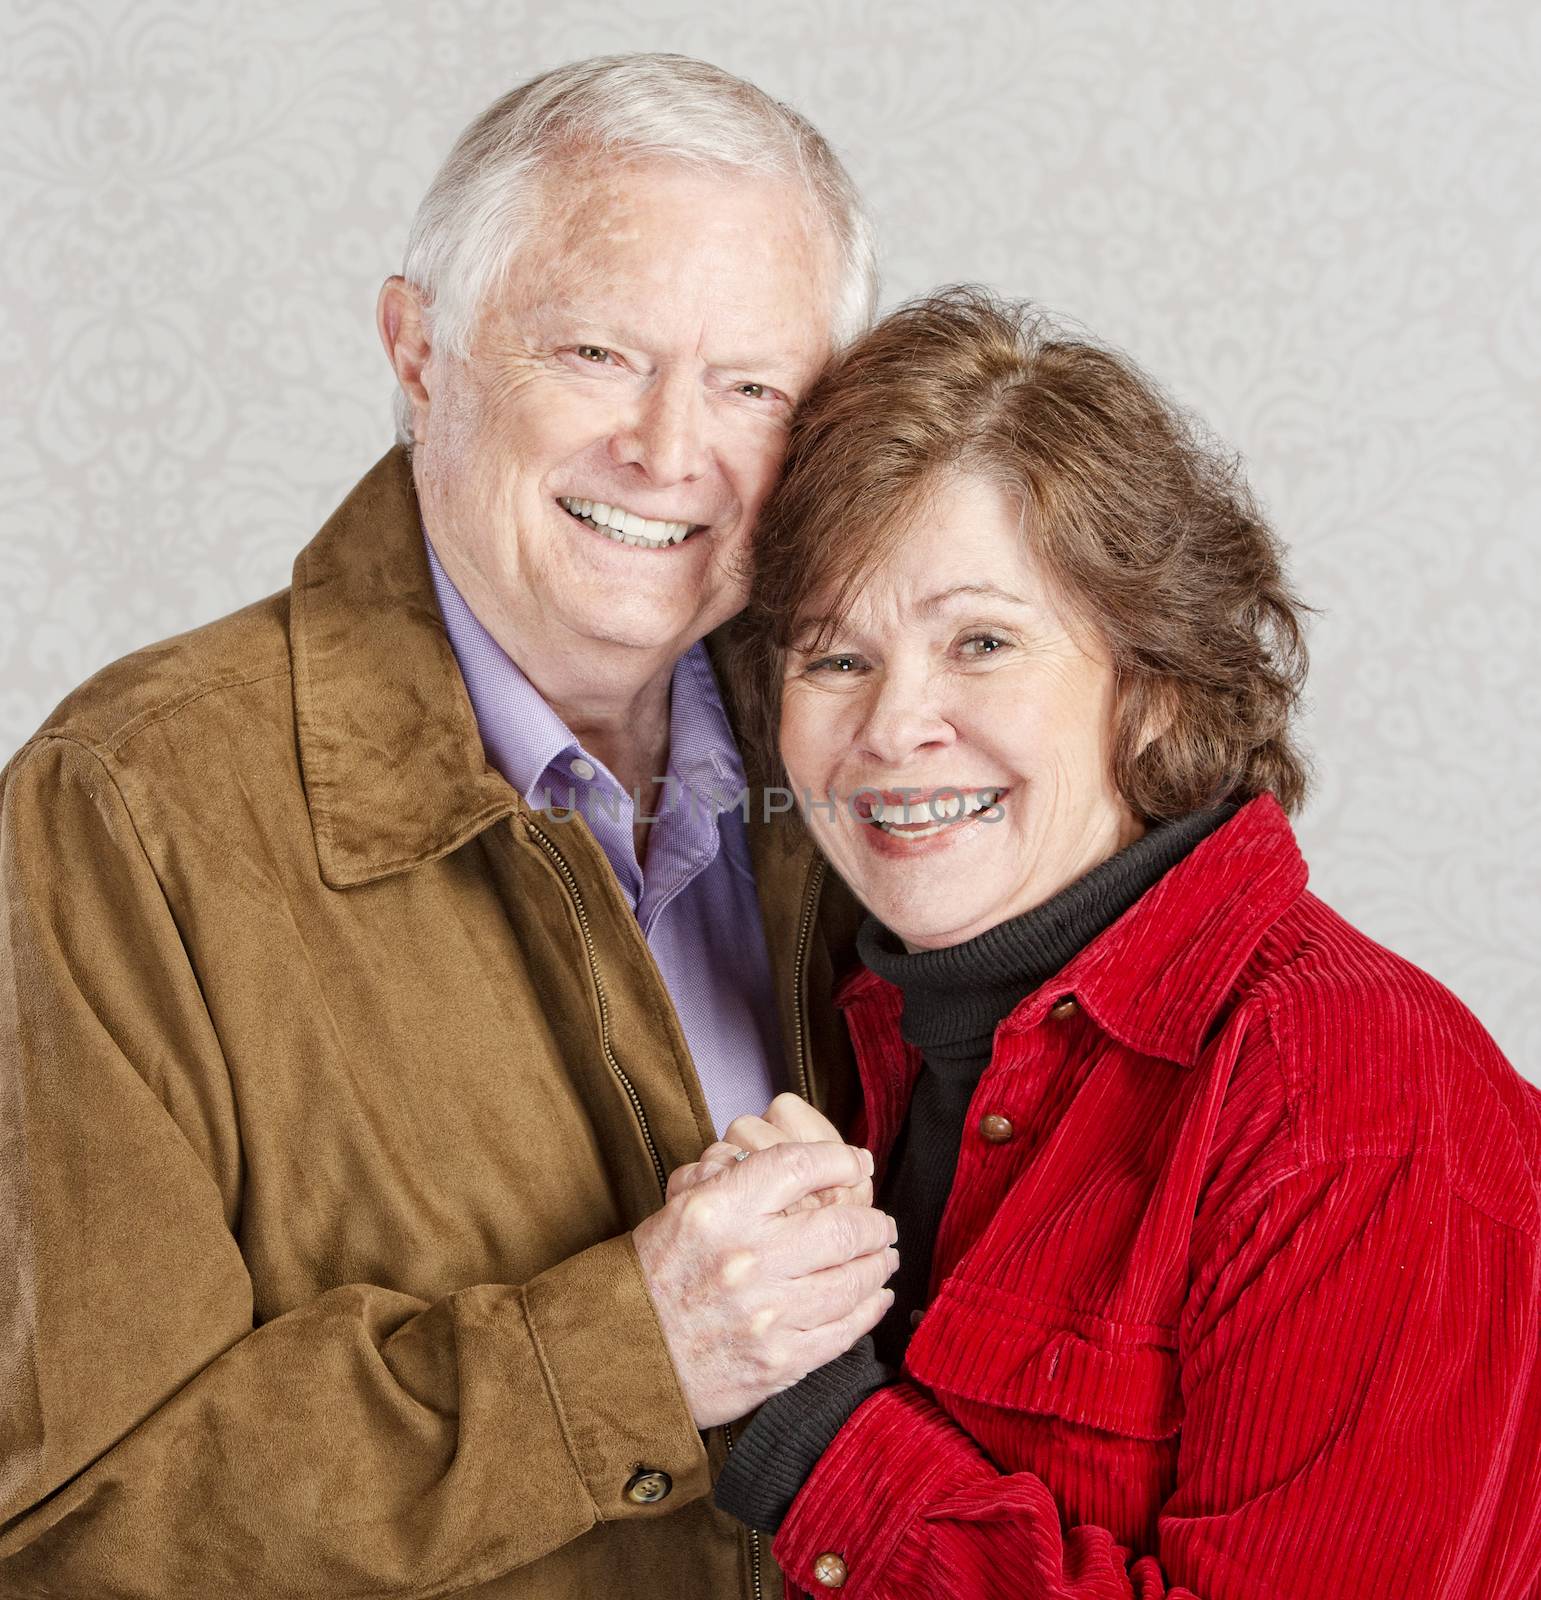 Embracing Senior Couple by Creatista